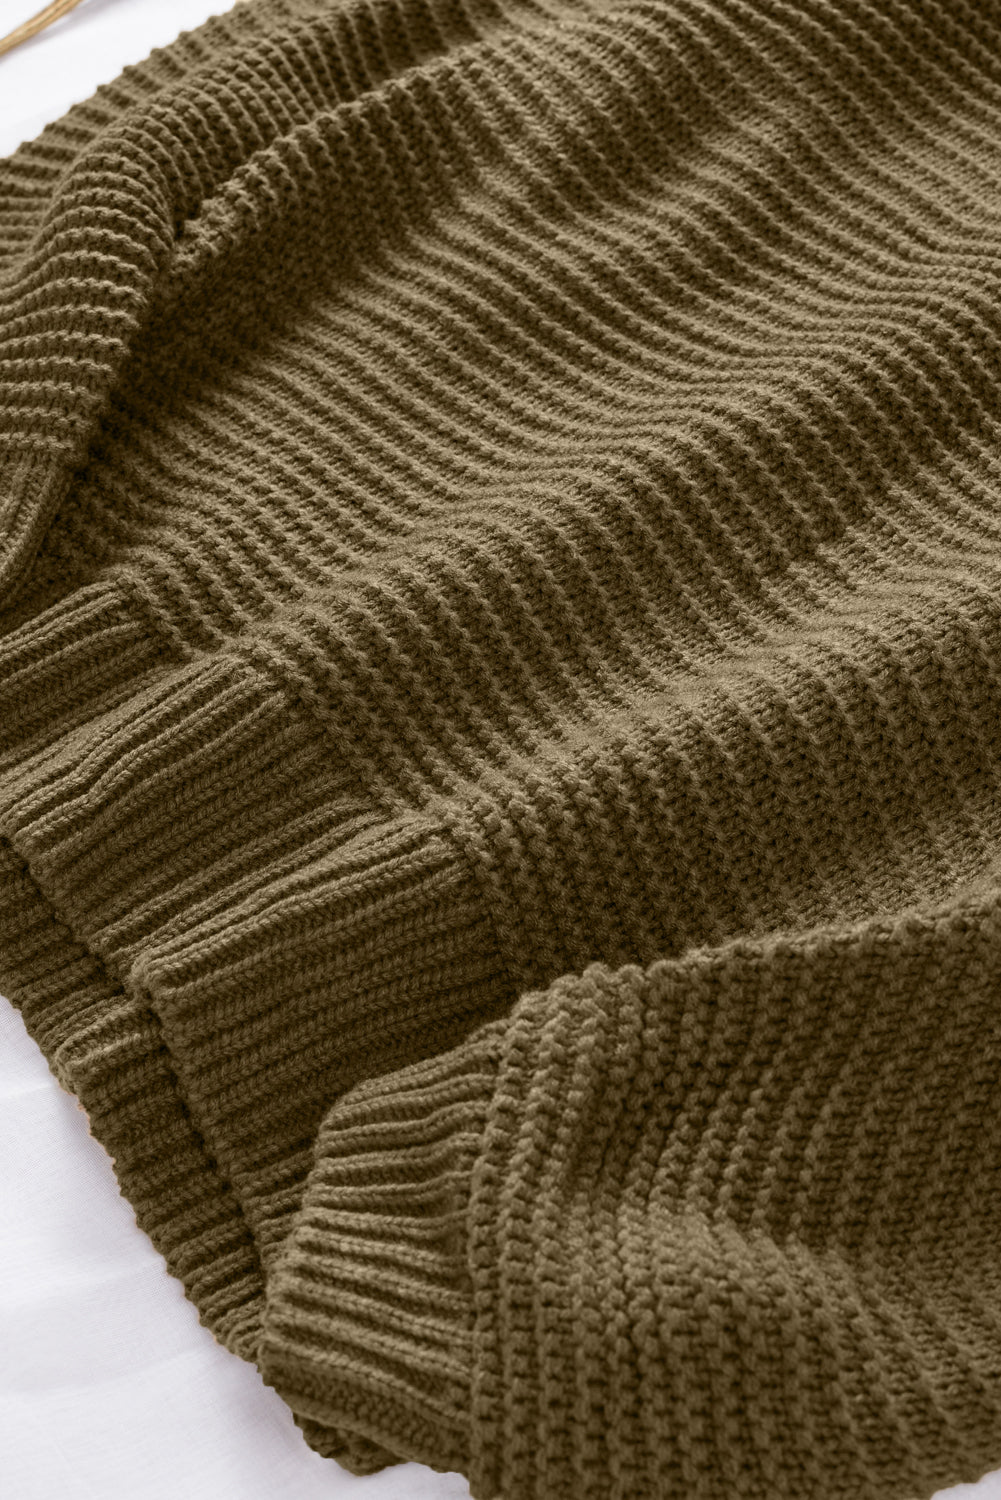 Sage Green Cozy Long Sleeves Turtleneck Sweater Sweaters & Cardigans JT's Designer Fashion